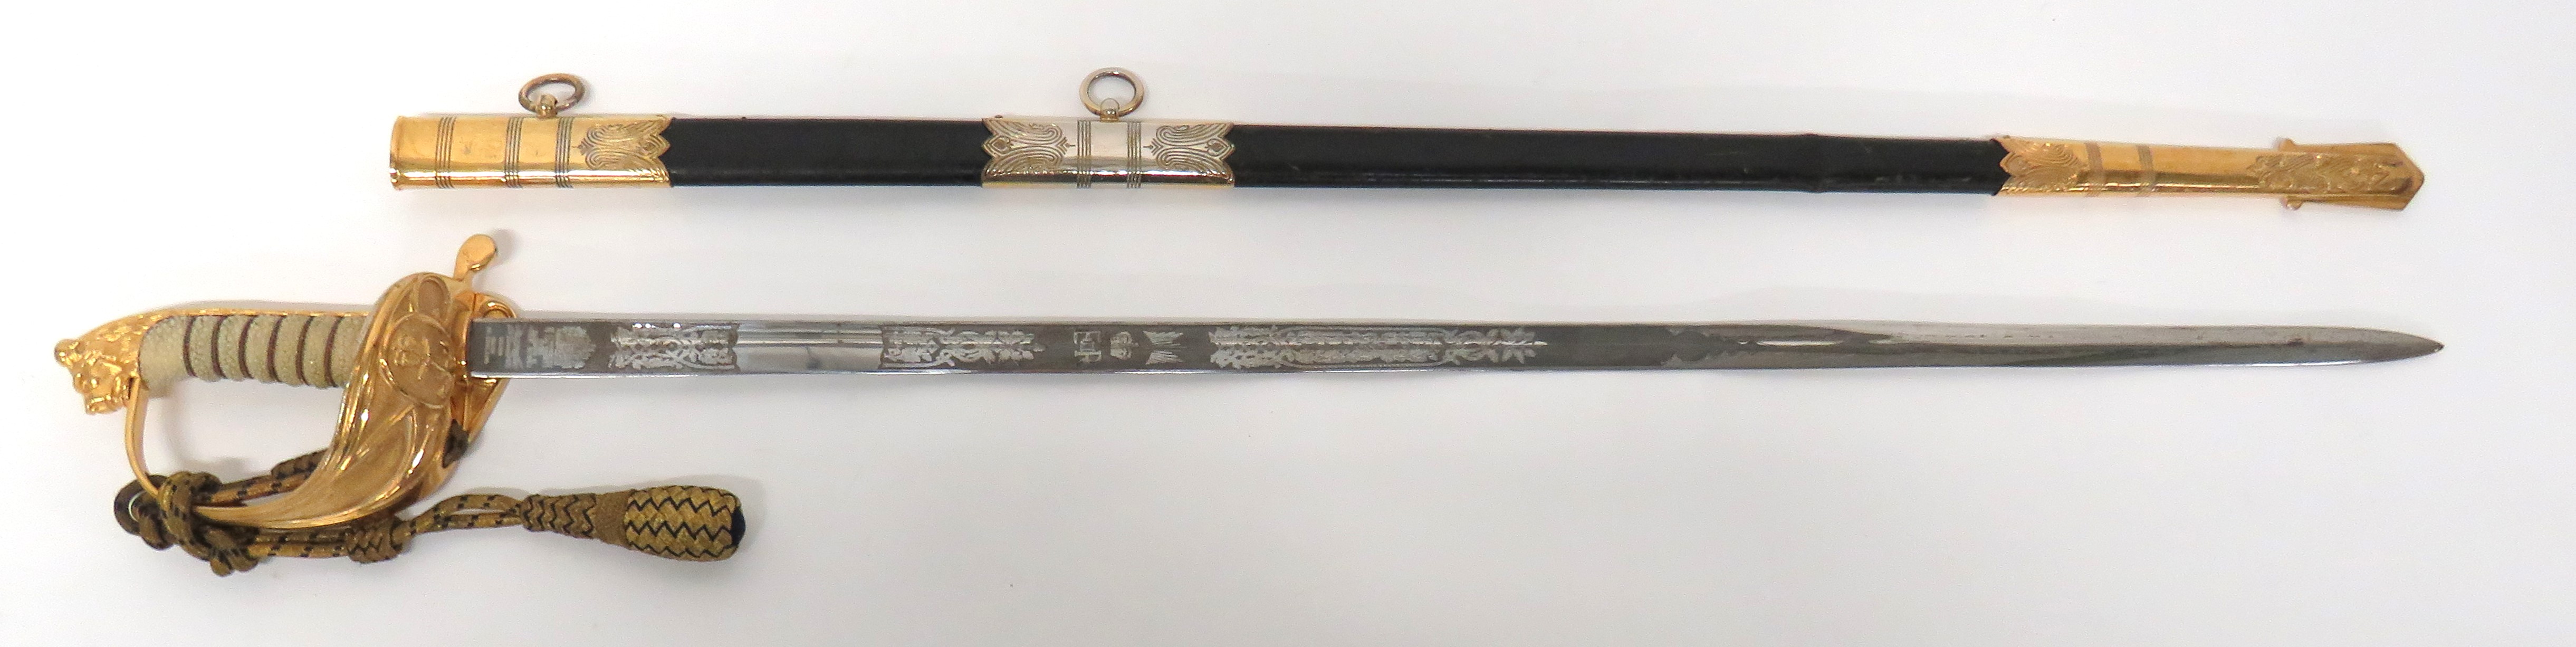 Elizabeth II Royal Navy Officer's Sword By Wilkinson 30 3/4 inch, single edged blade with fuller.